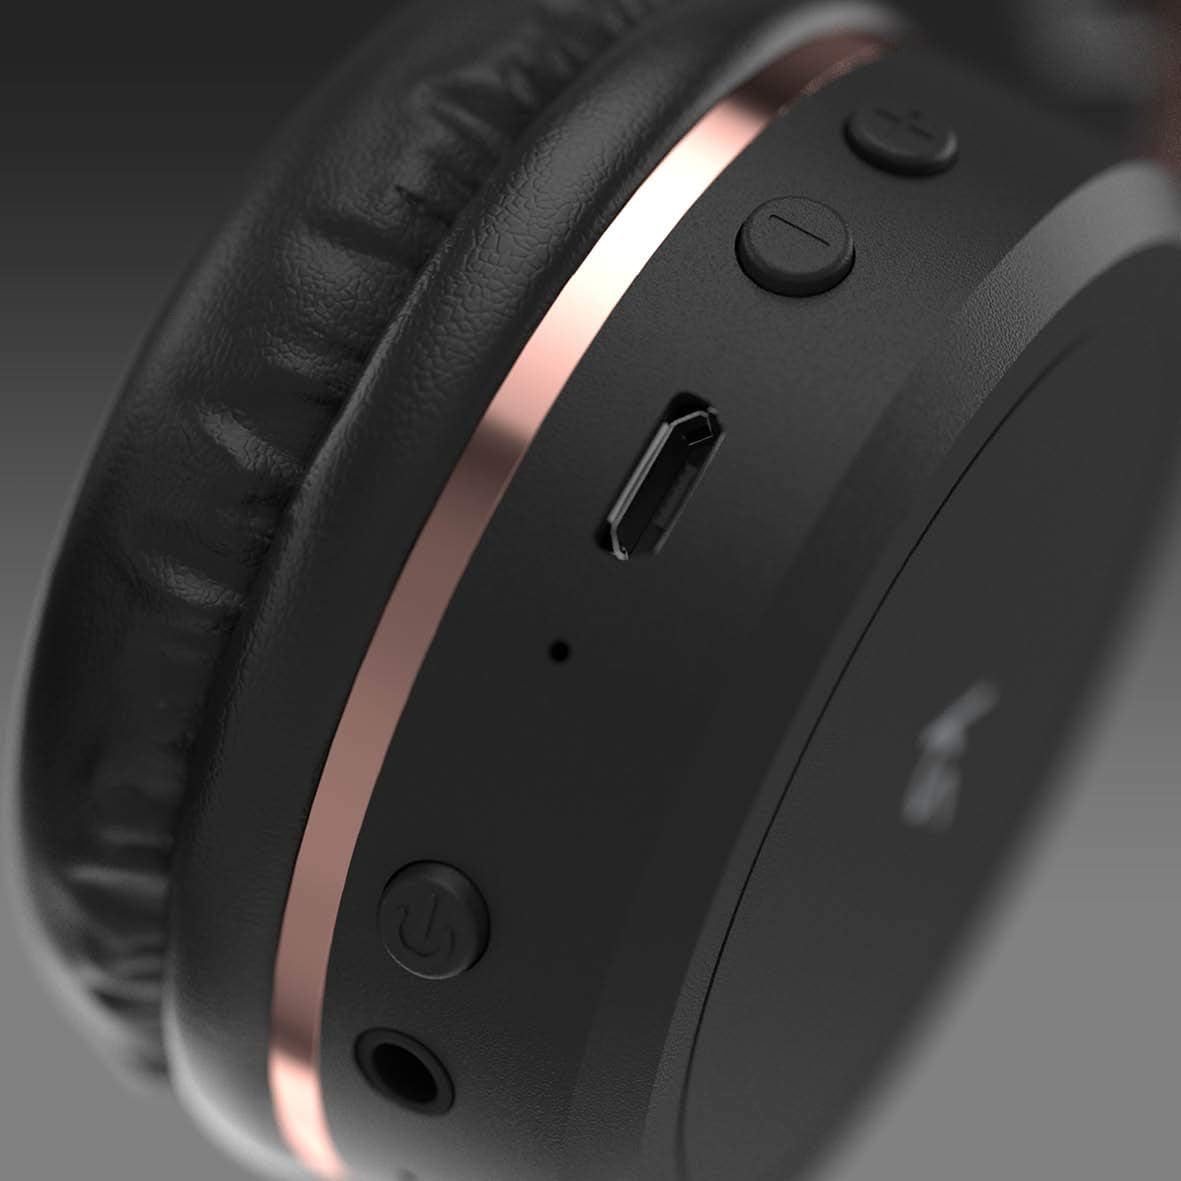 KitSound Metro X Wireless On-Ear Headphones - Black - Refurbished Pristine